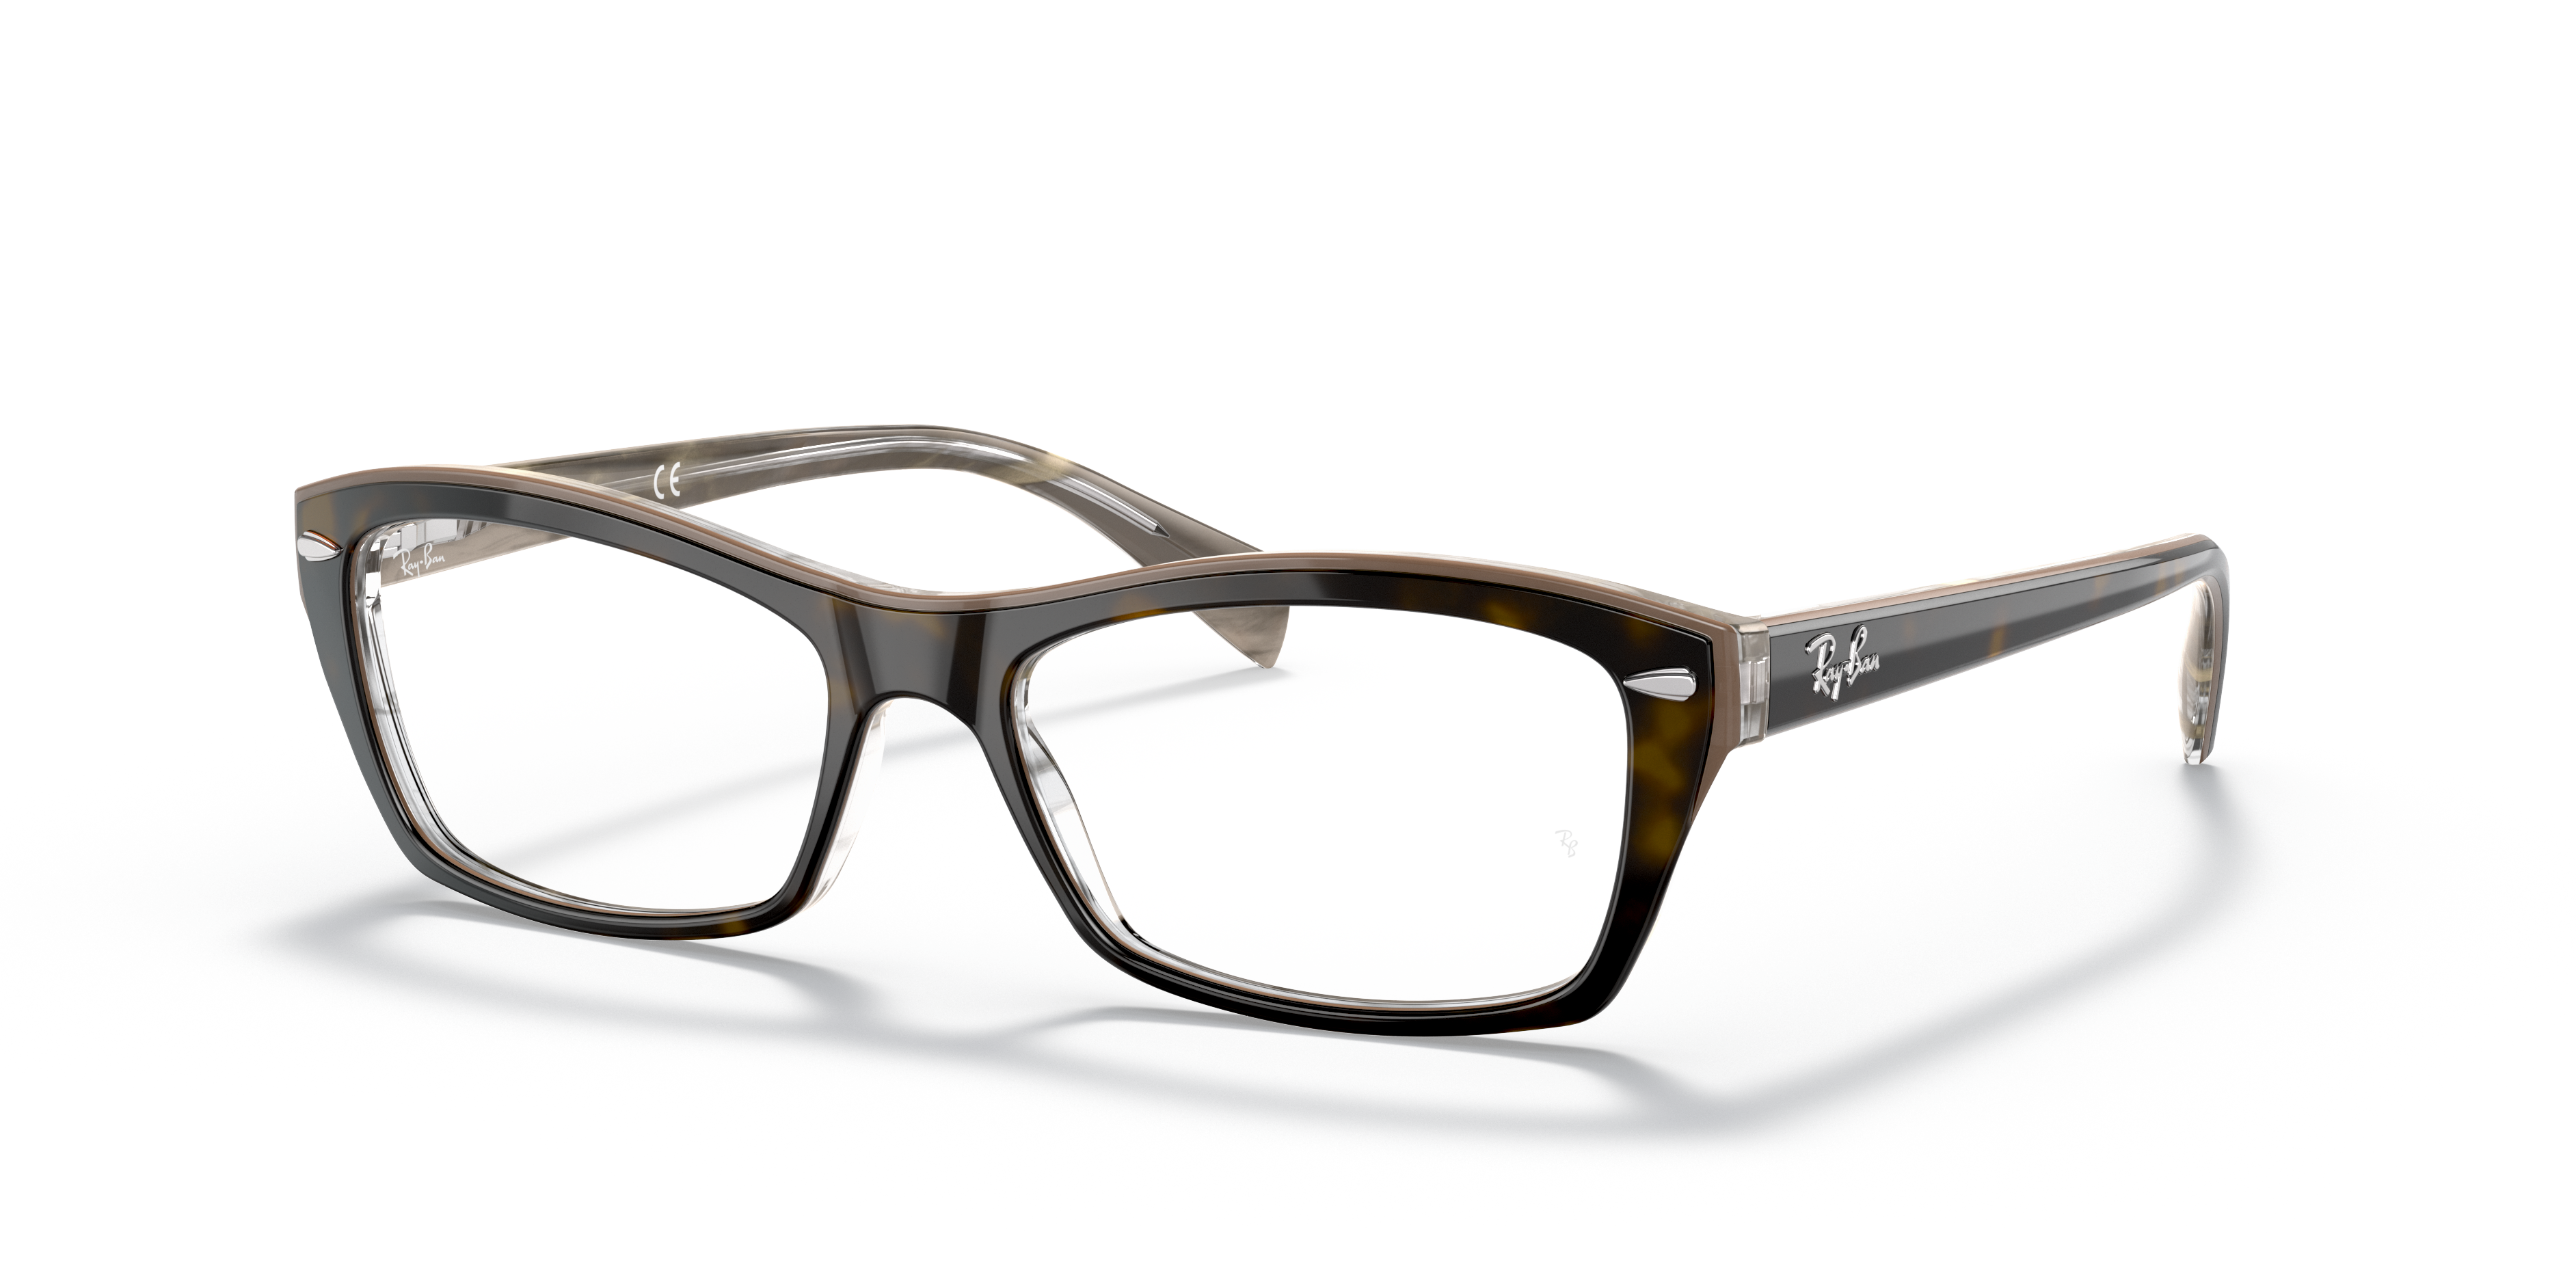 Rb5255 Eyeglasses with Tortoise Frame | Ray-Ban®